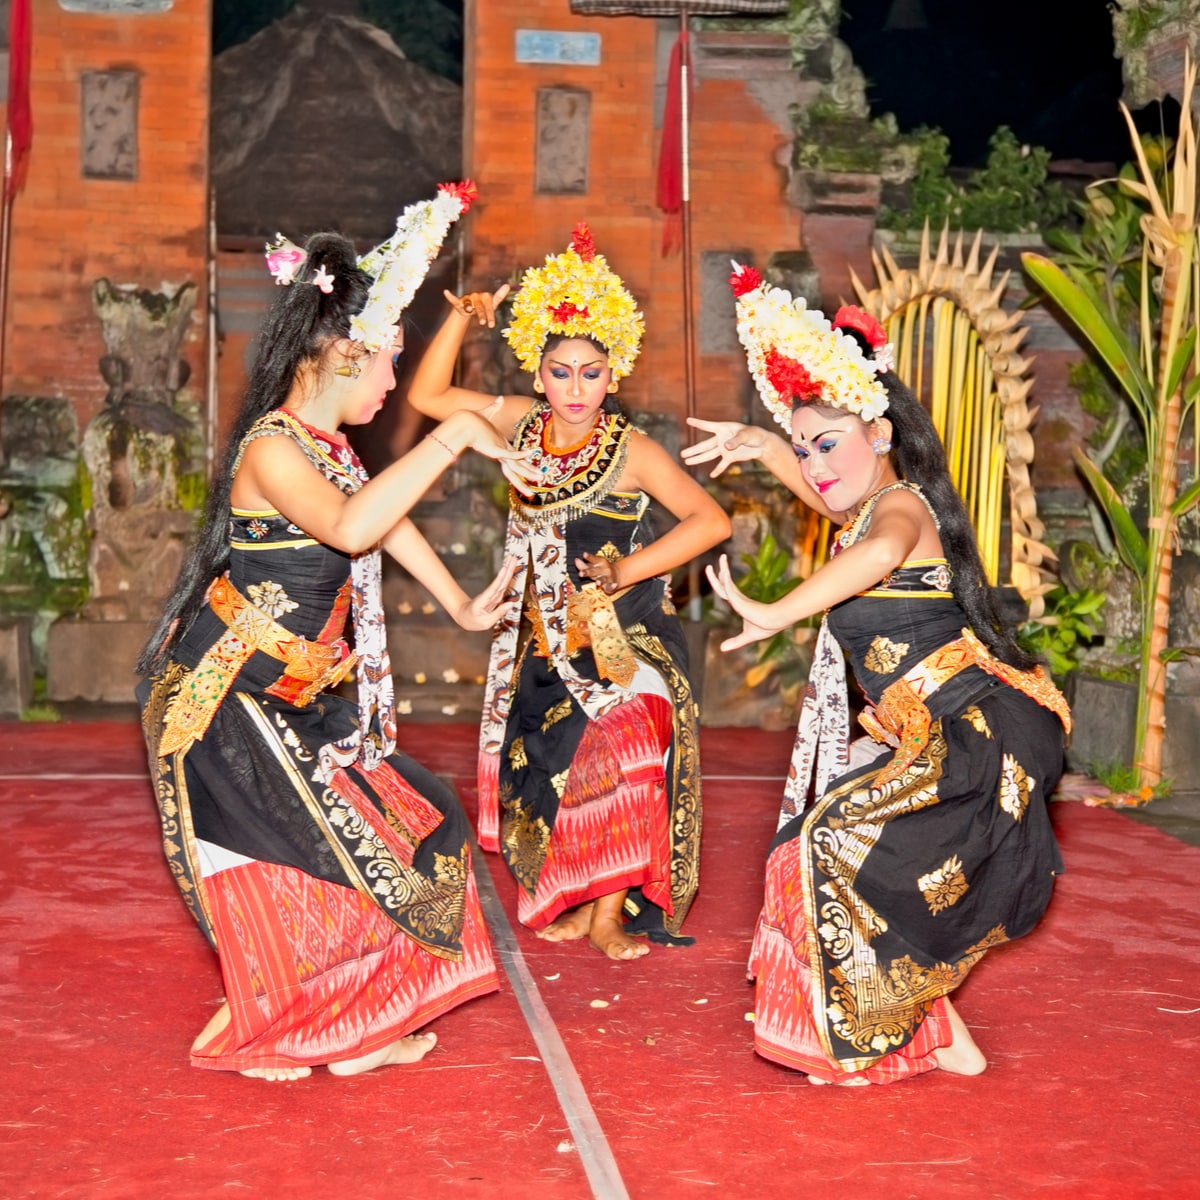 Bali's Janger Dance: A Joyful Delight for All Ages